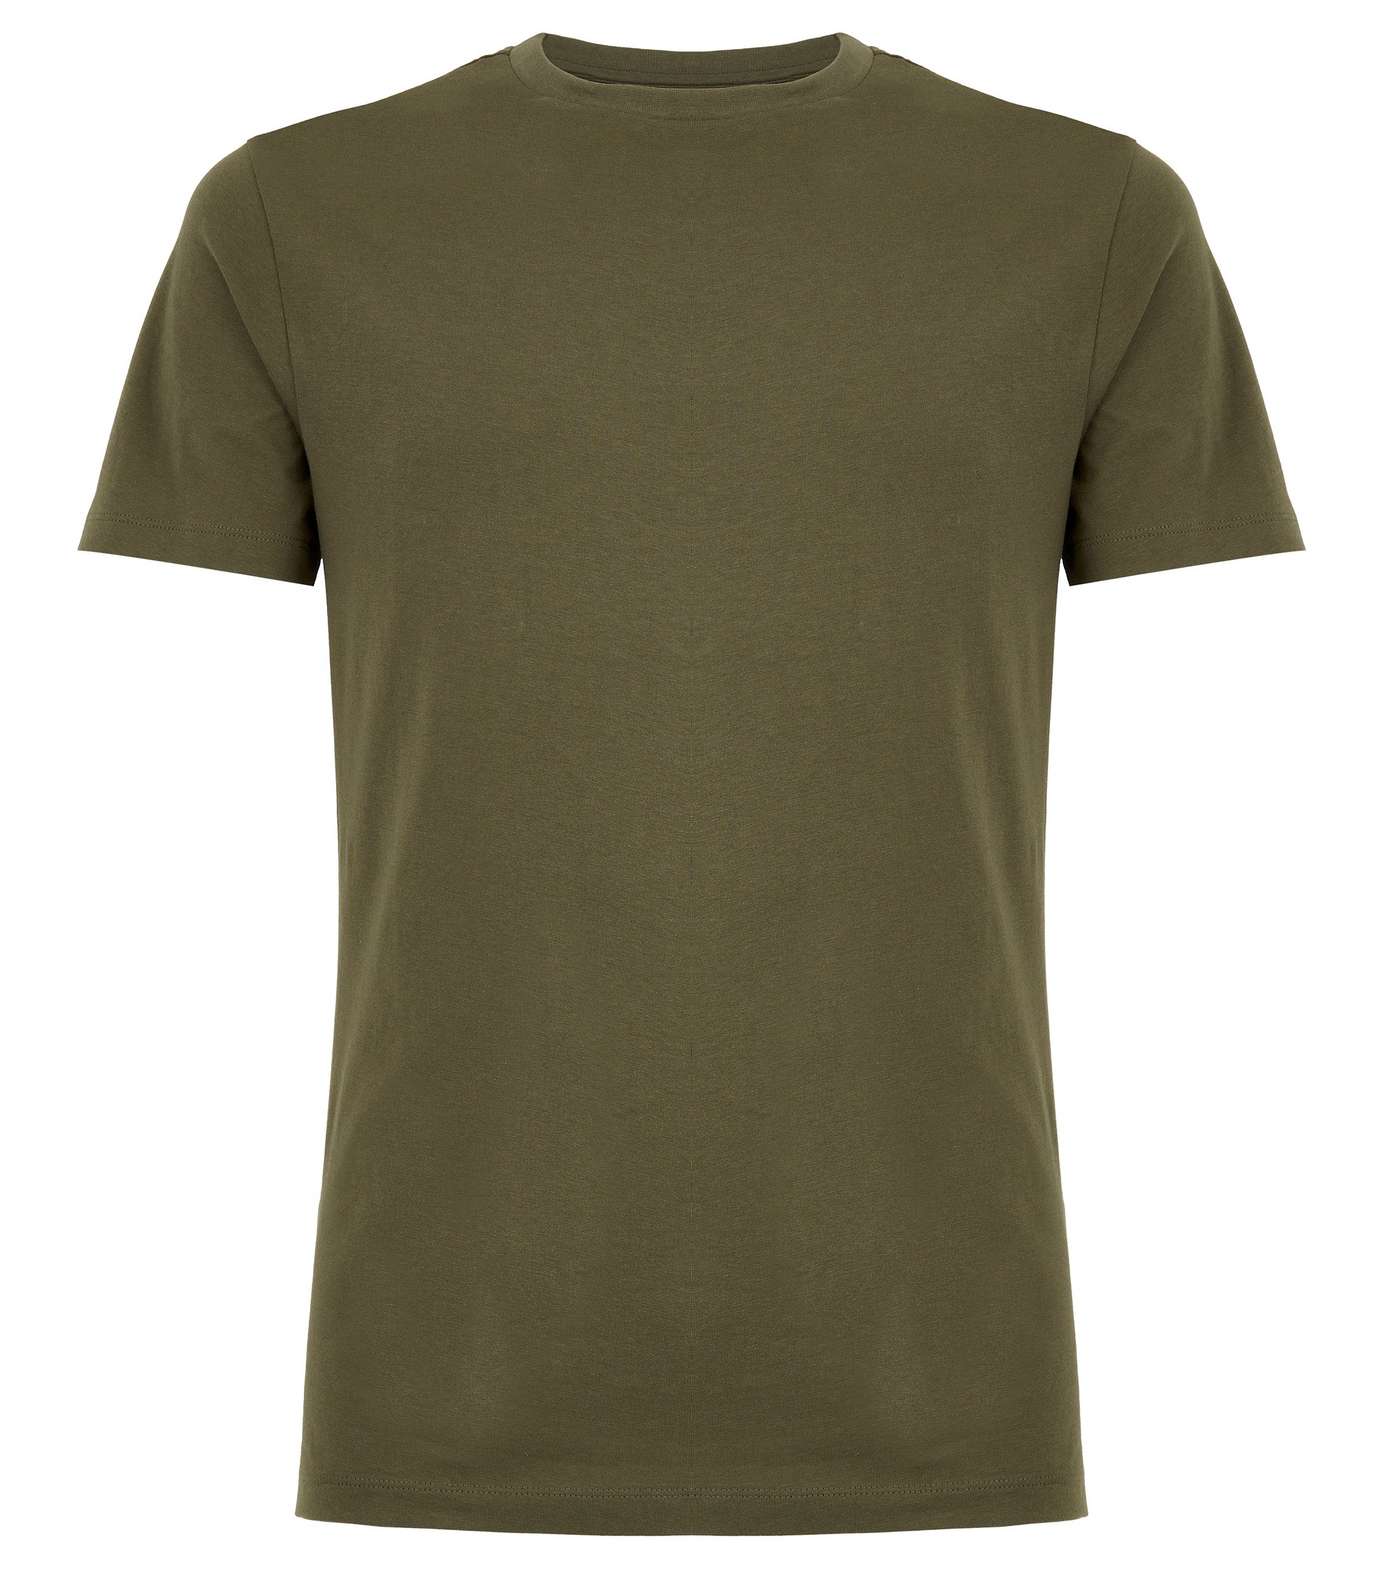 Khaki Muscle Fit T-Shirt Image 4